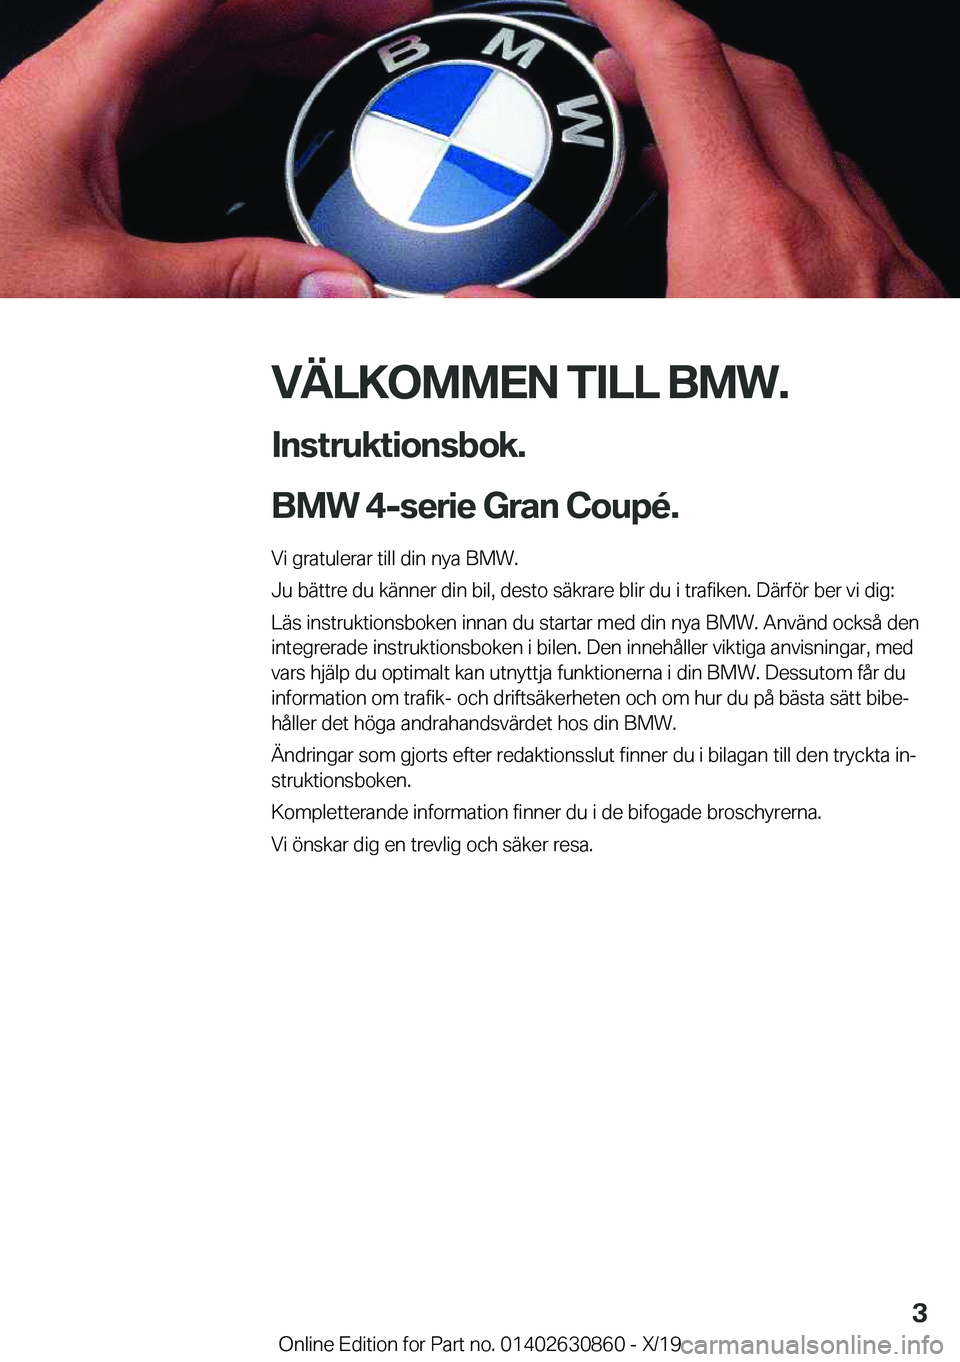 BMW 4 SERIES GRAN COUPE 2020  InstruktionsbÖcker (in Swedish) �V�Ä�L�K�O�M�M�E�N��T�I�L�L��B�M�W�.�I�n�s�t�r�u�k�t�i�o�n�s�b�o�k�.
�B�M�W��4�-�s�e�r�i�e��G�r�a�n��C�o�u�p�